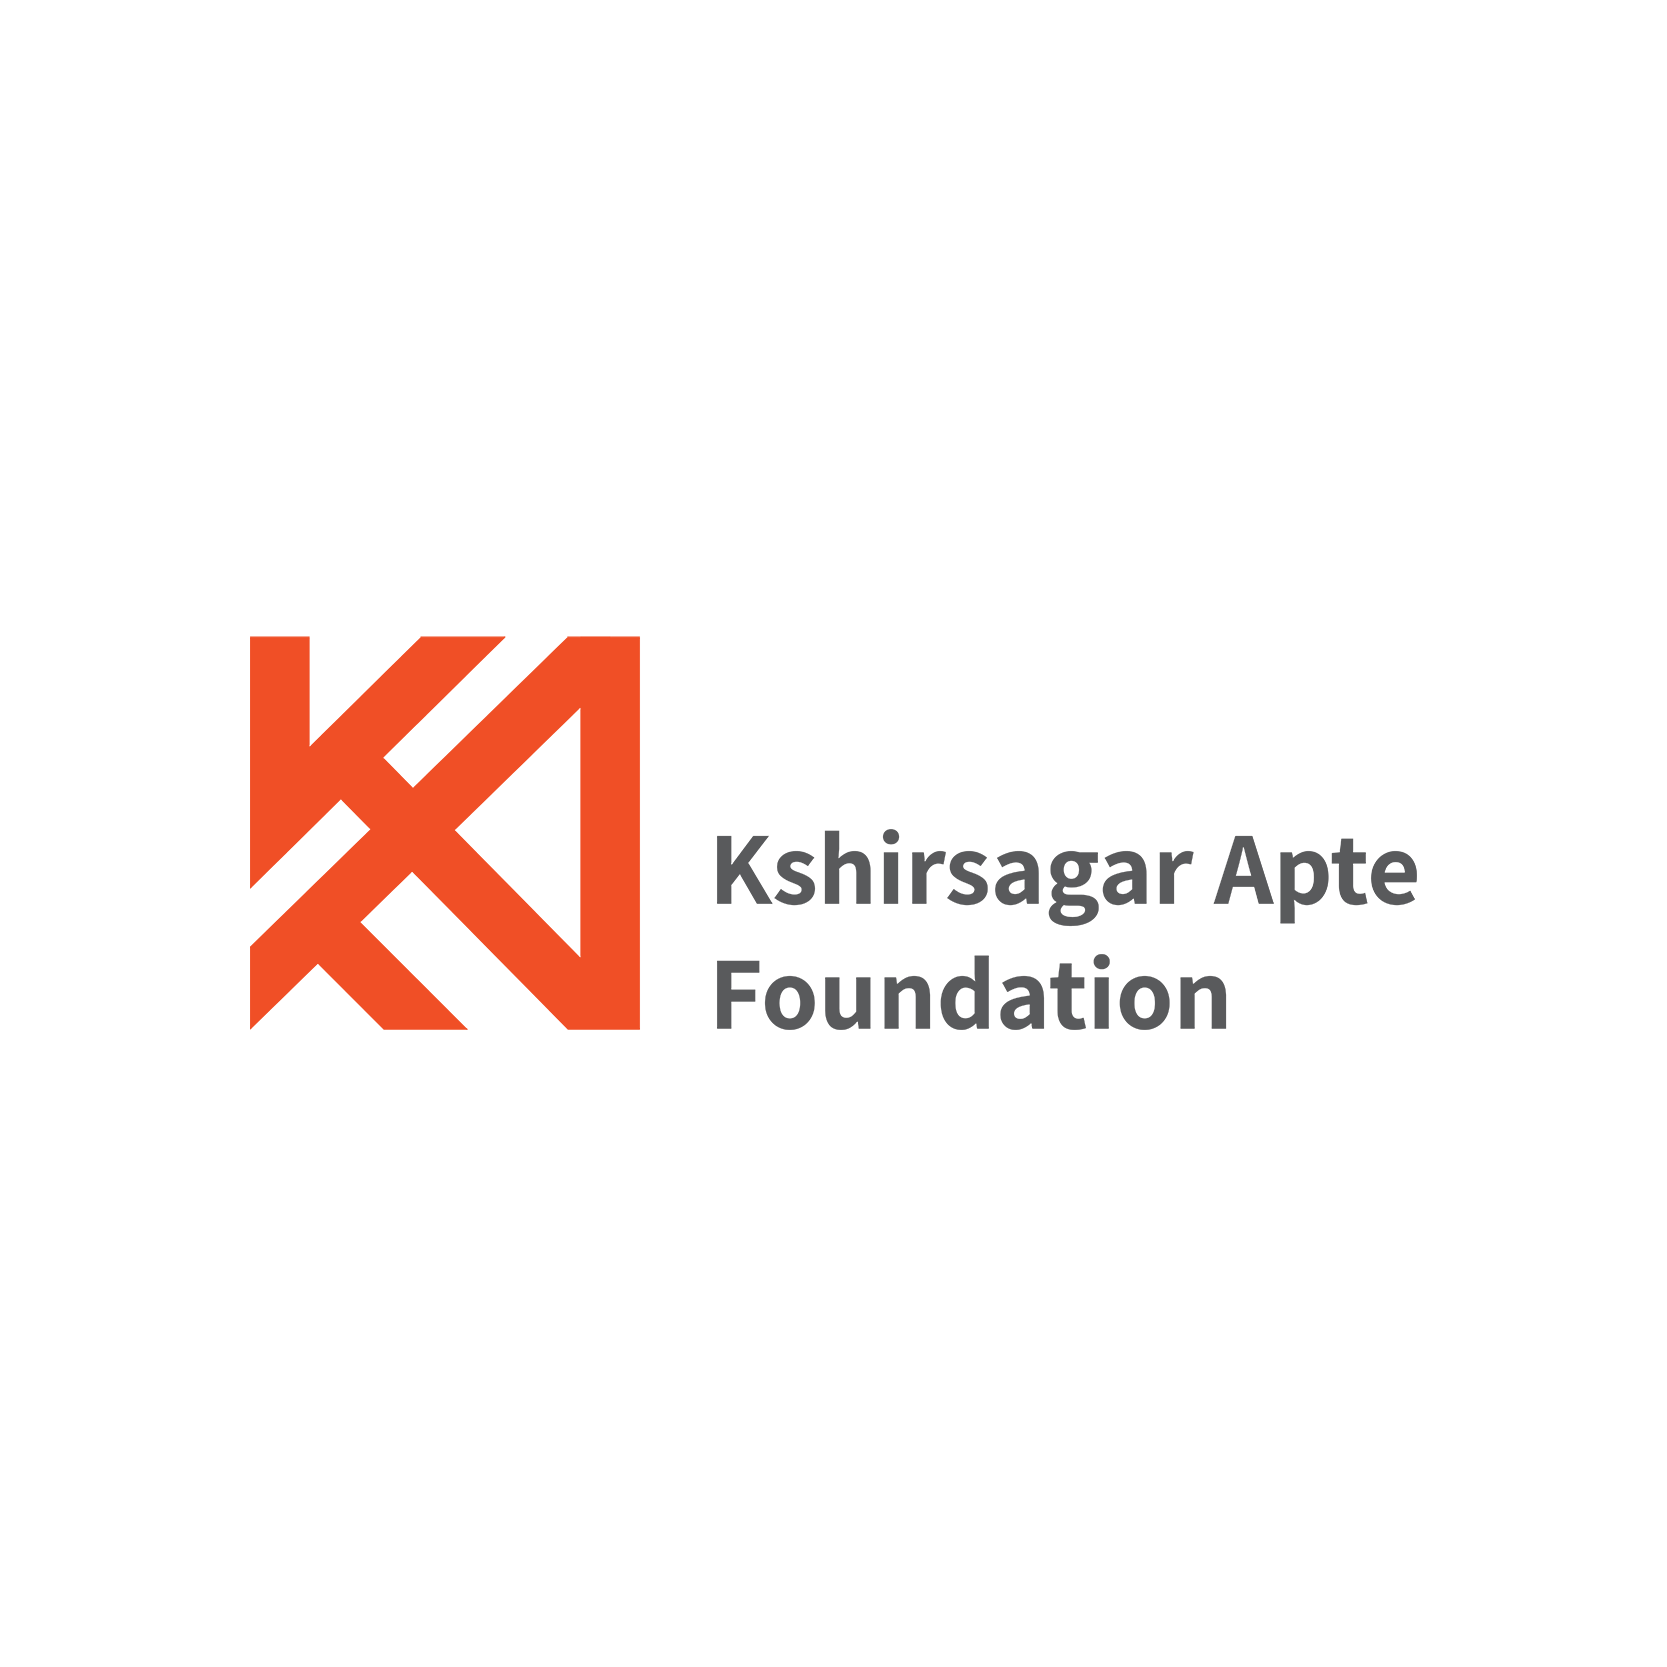 Kshirsagar Apte Foundation